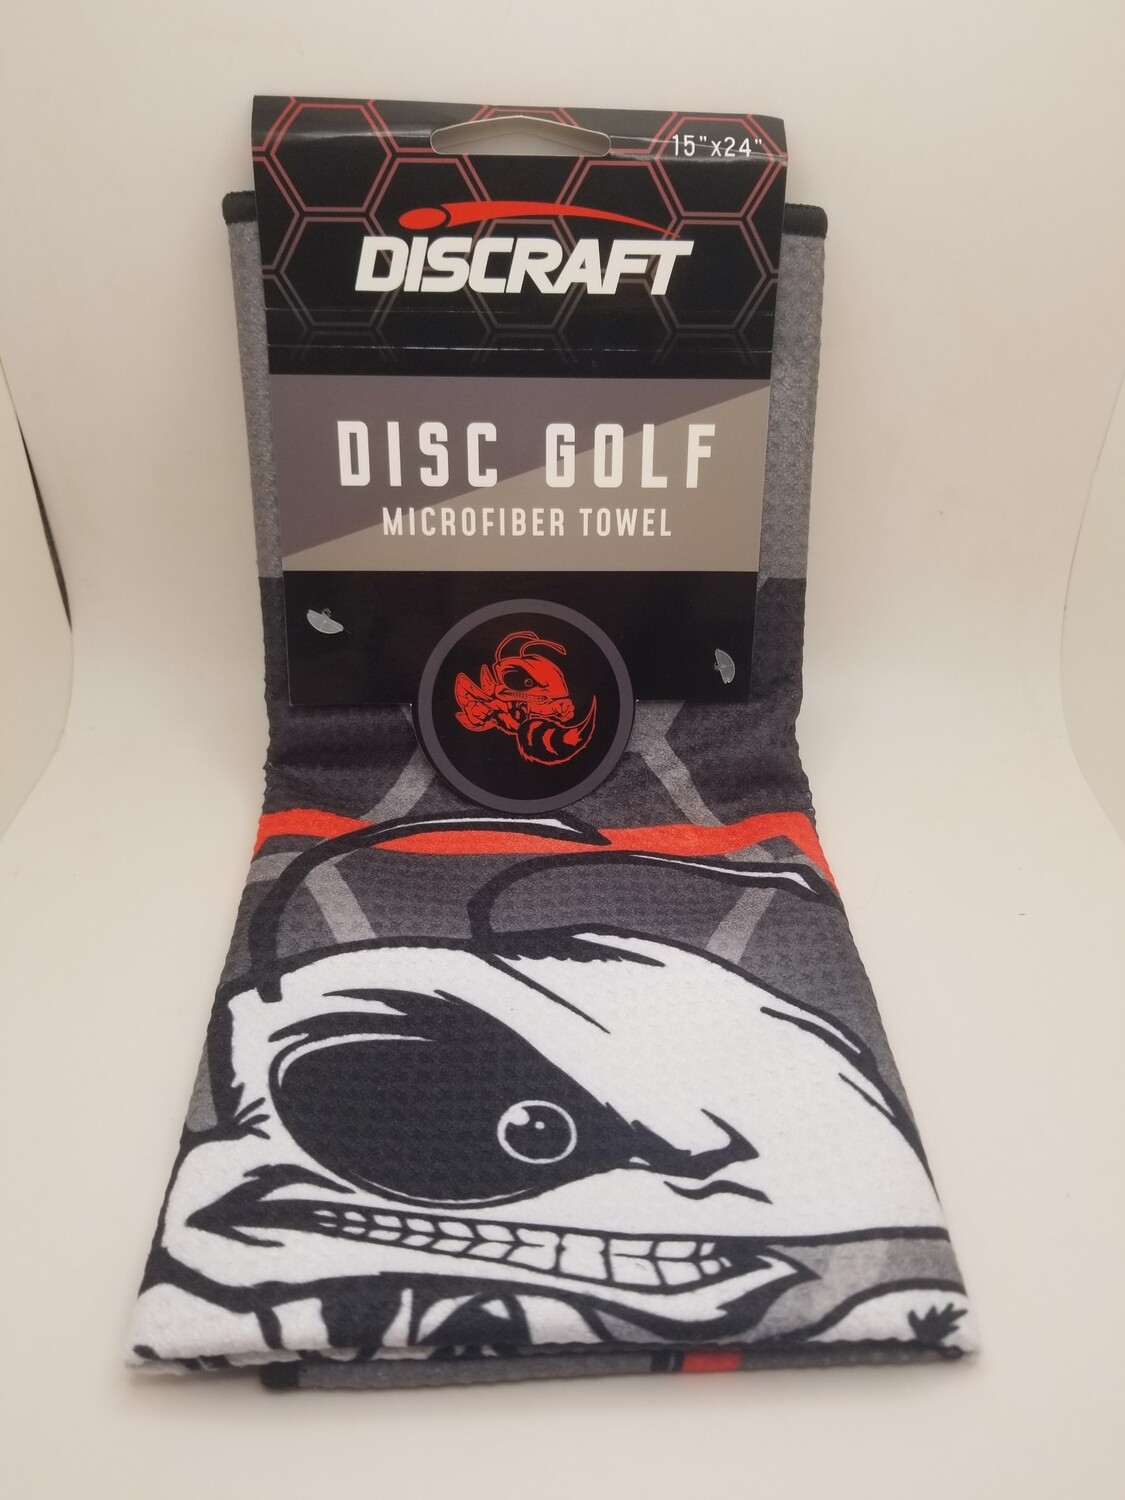 Discraft Discs Disc Golf Microfiber Towel Grey/Black/Silver White Buzzz